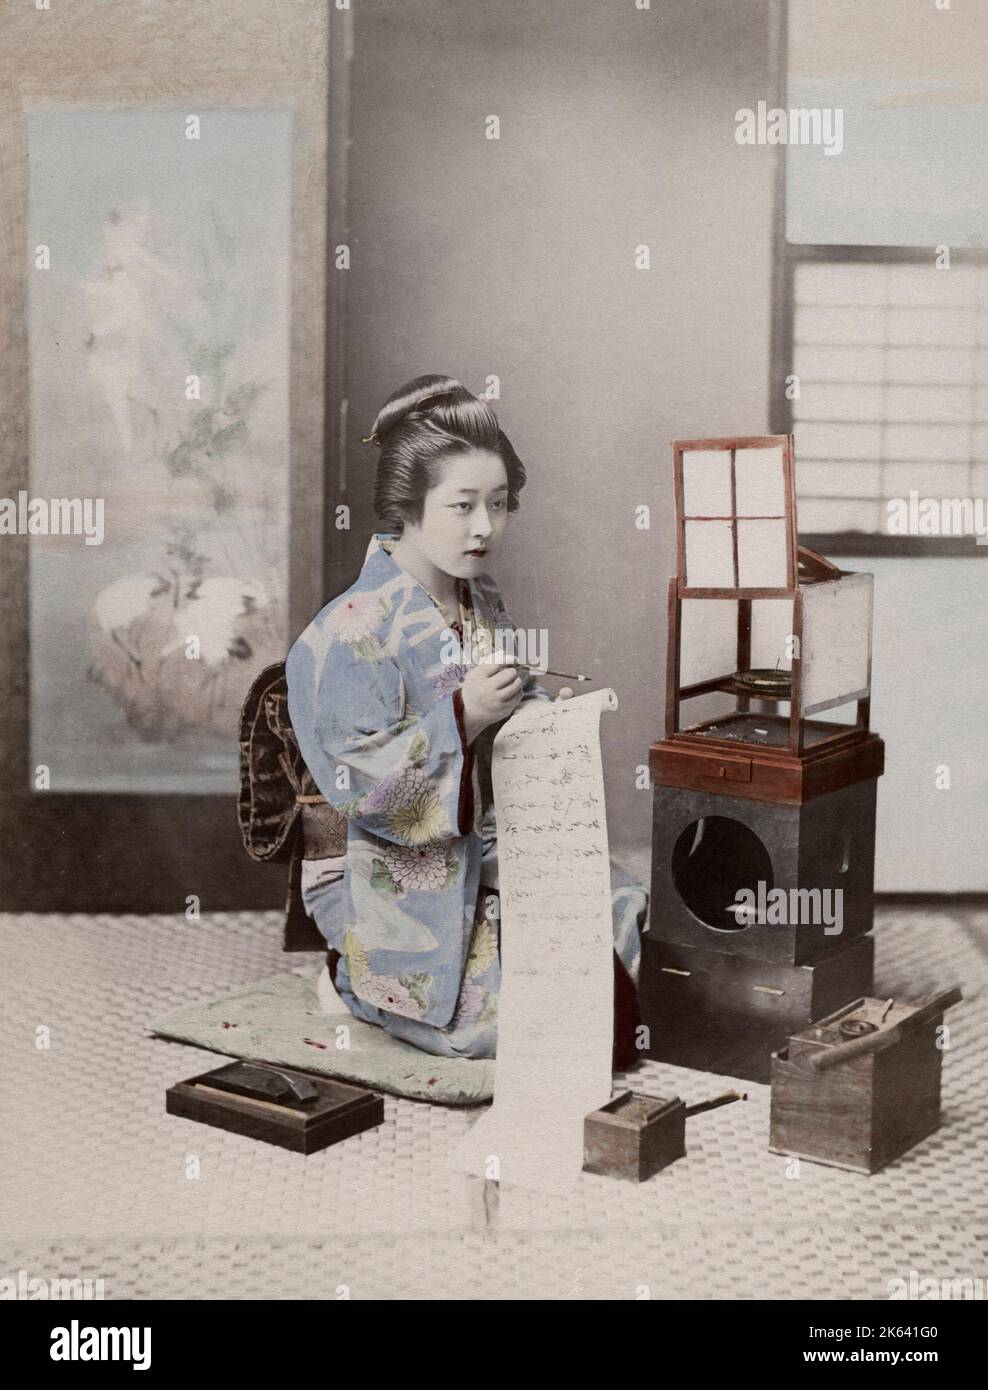 Japanese geisha in an ornate kimono writing a letter. Vintage 19th century photograph. Stock Photo